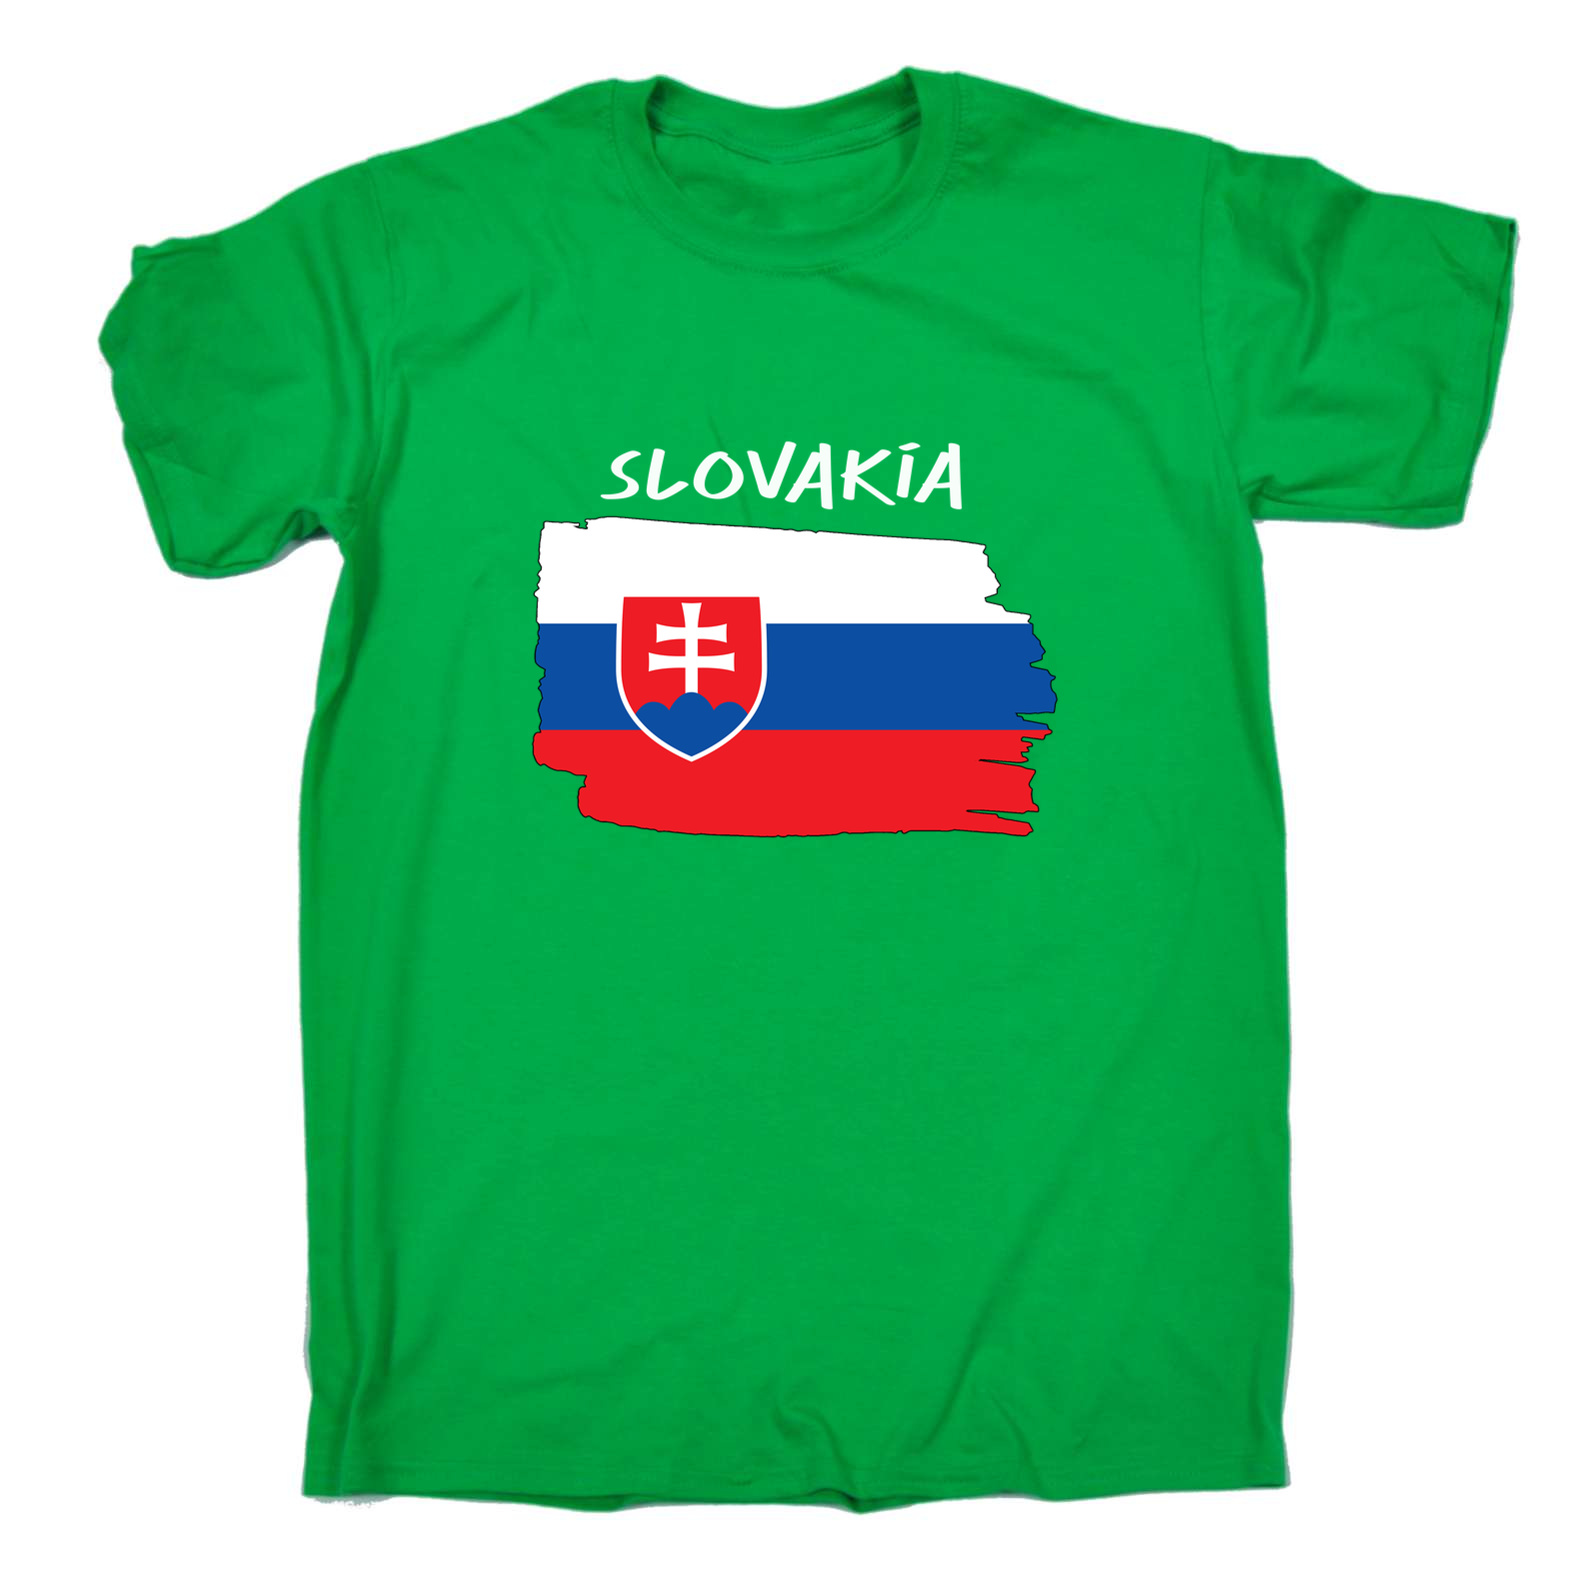 Slovakia Country Flag Nationality Supporter Sports Kids Children T-Shirt Tshirt VA11228